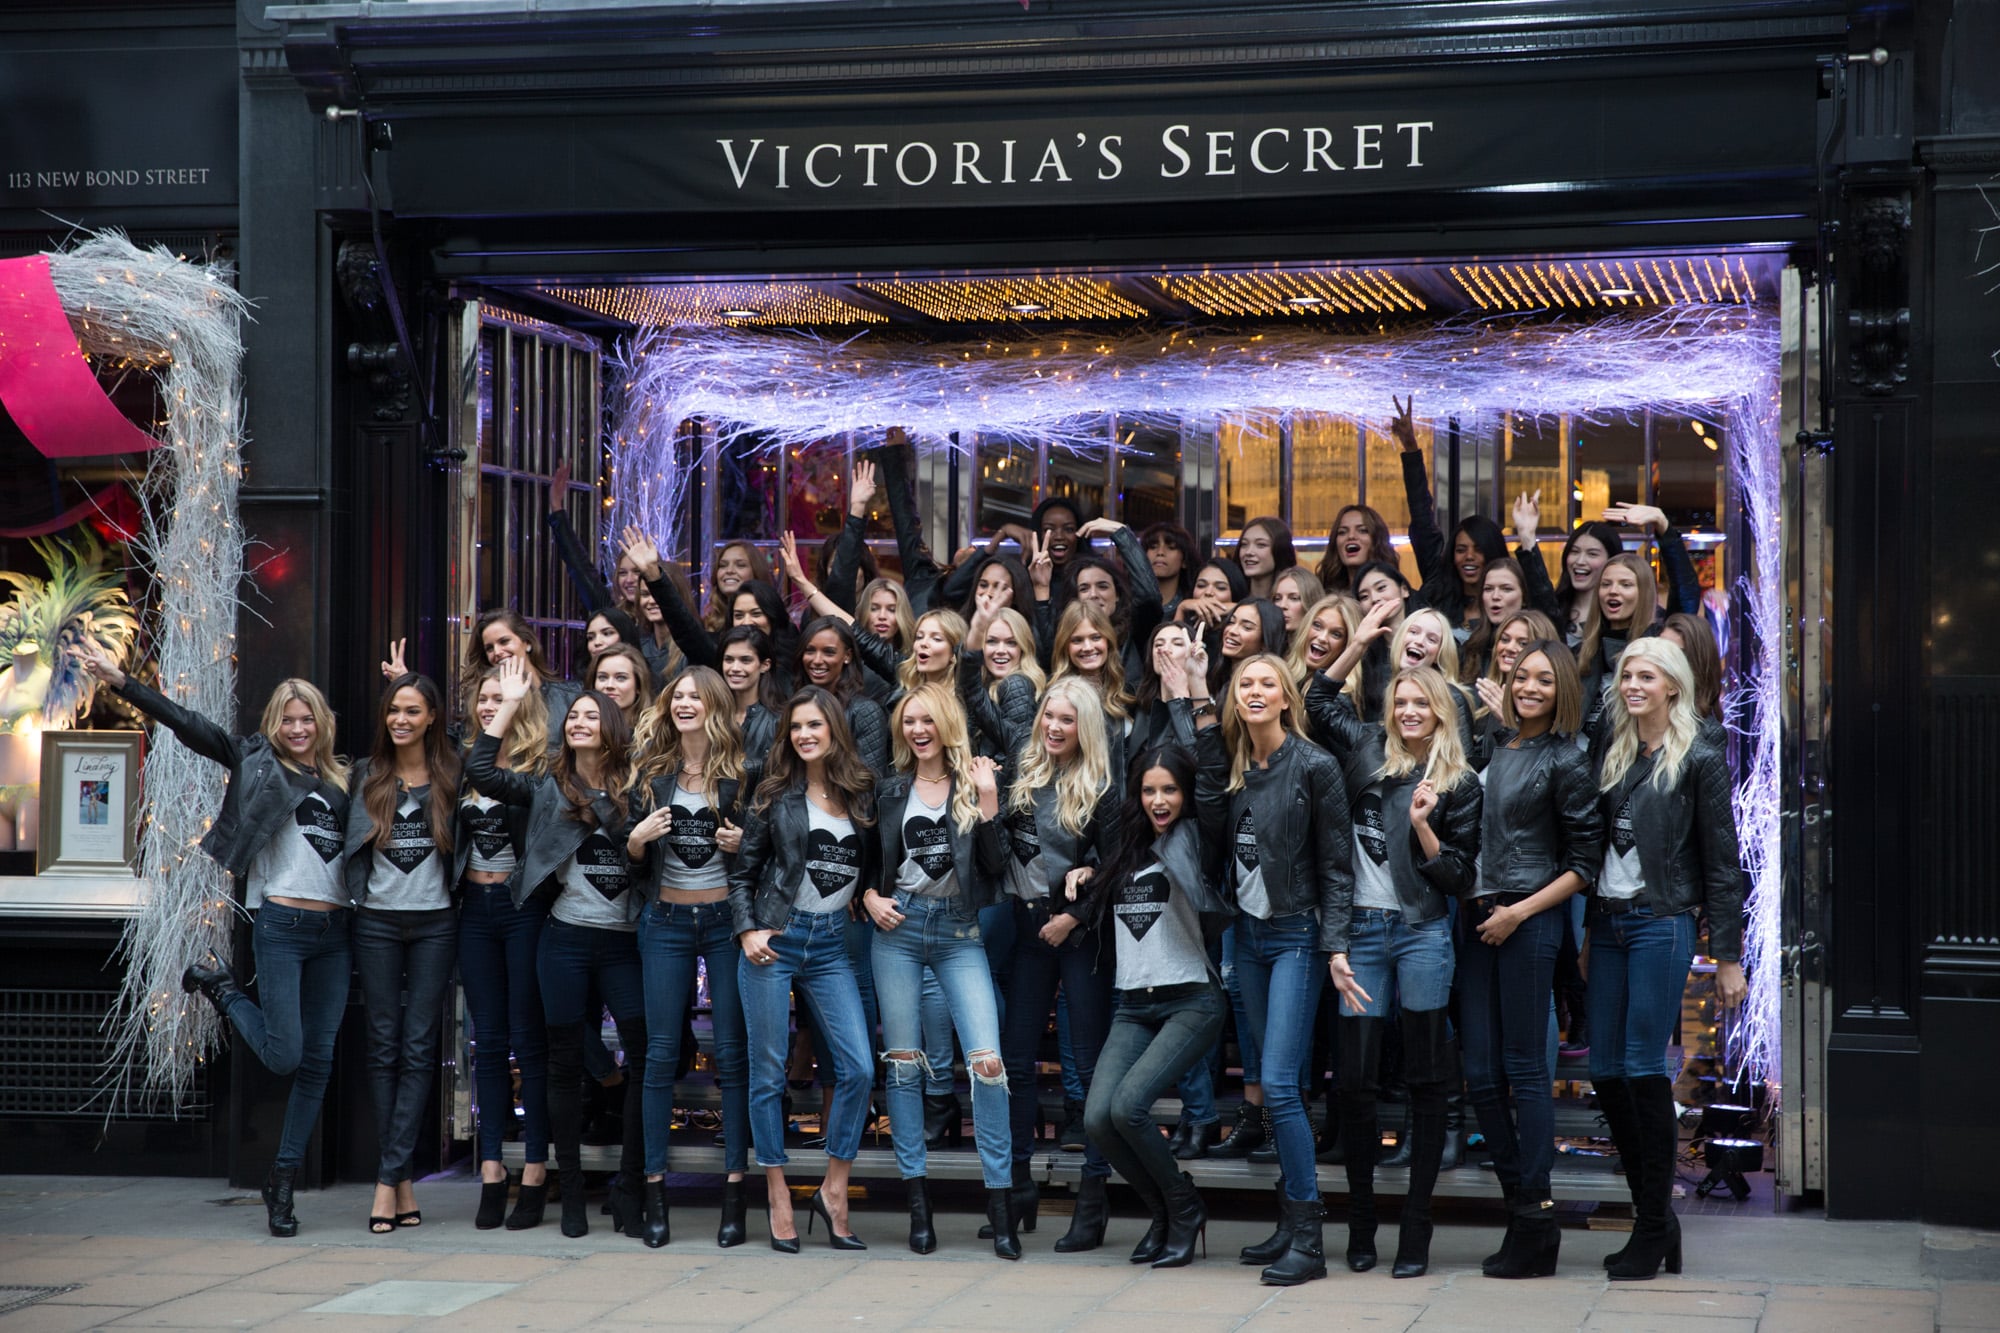 L Brands' Deal With Fashion Retailer Next Gives Victoria's Secret